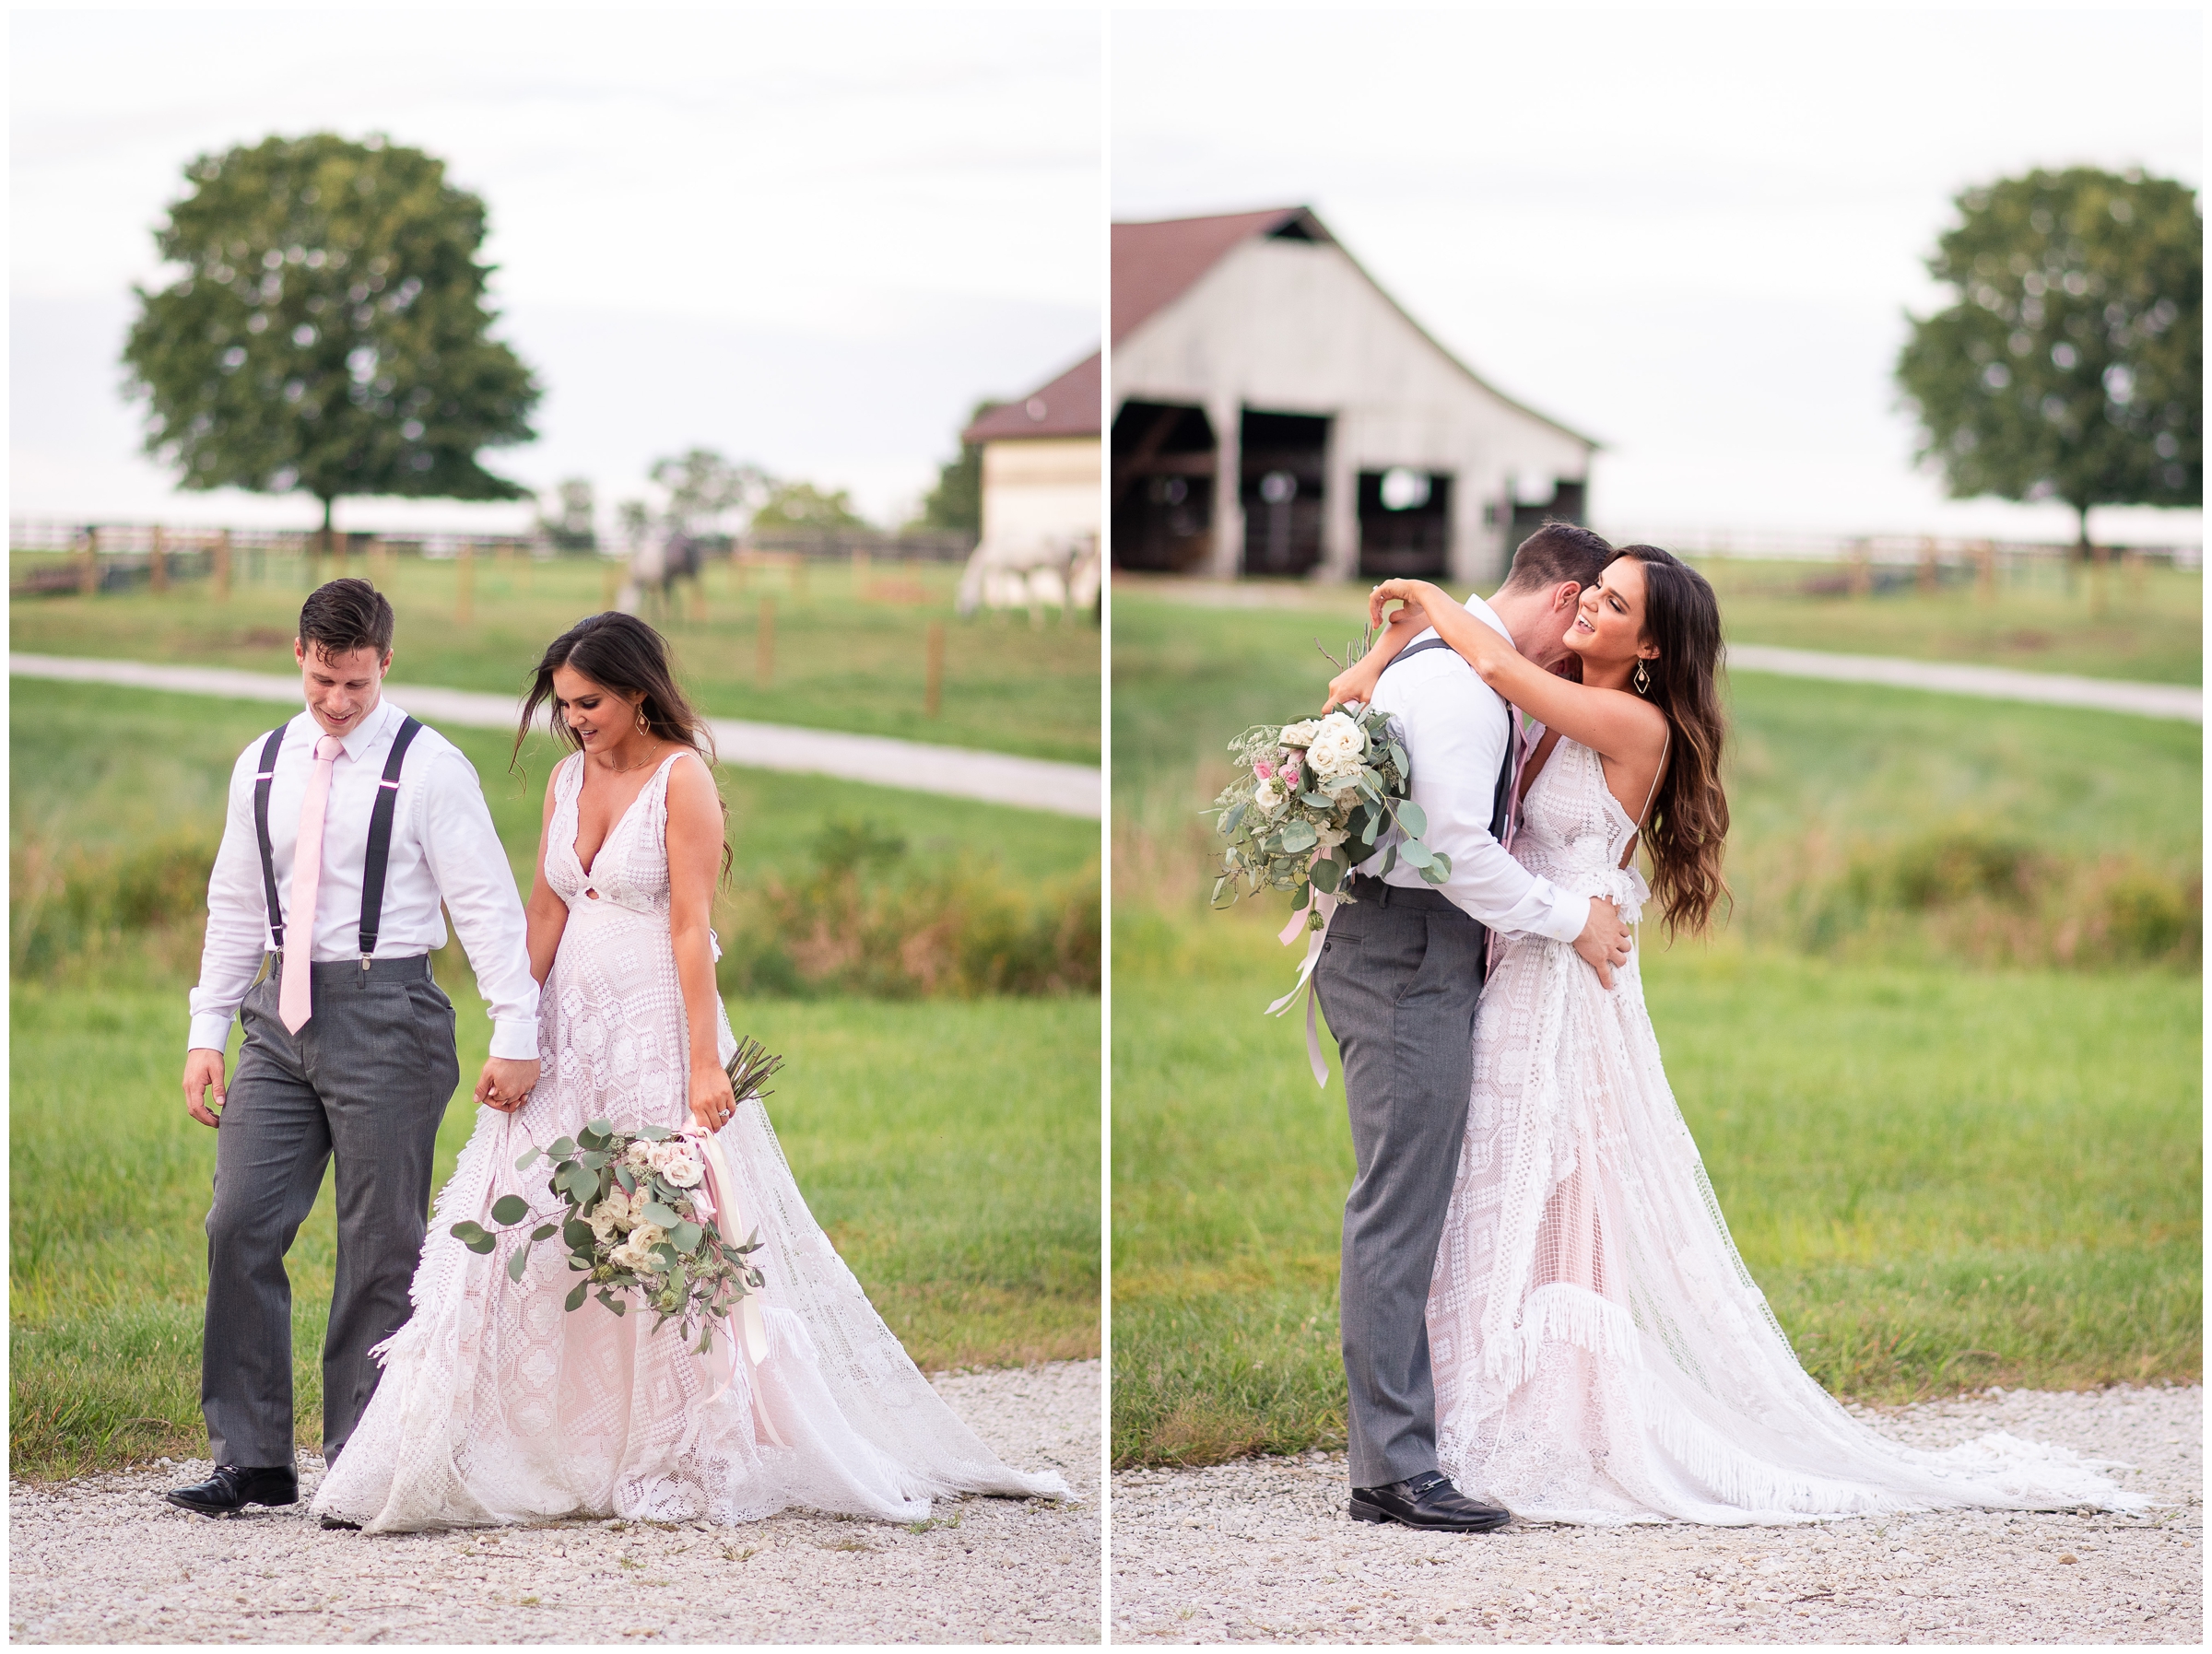 Loveland Farm & Stables Wedding